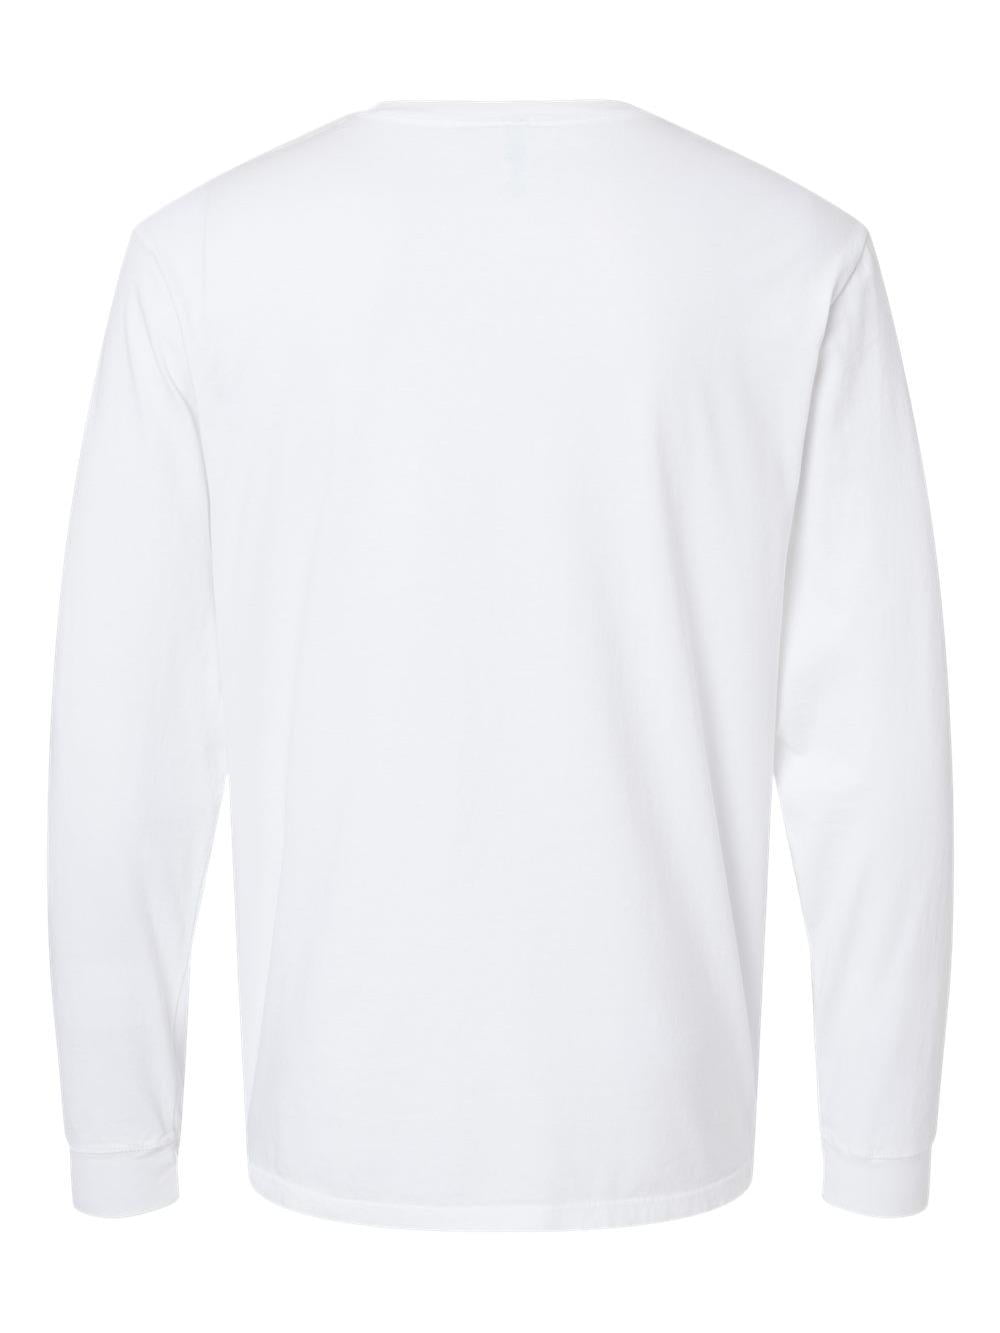 SoftShirts - Organic Long Sleeve T-Shirt - 420 - White - Size: M